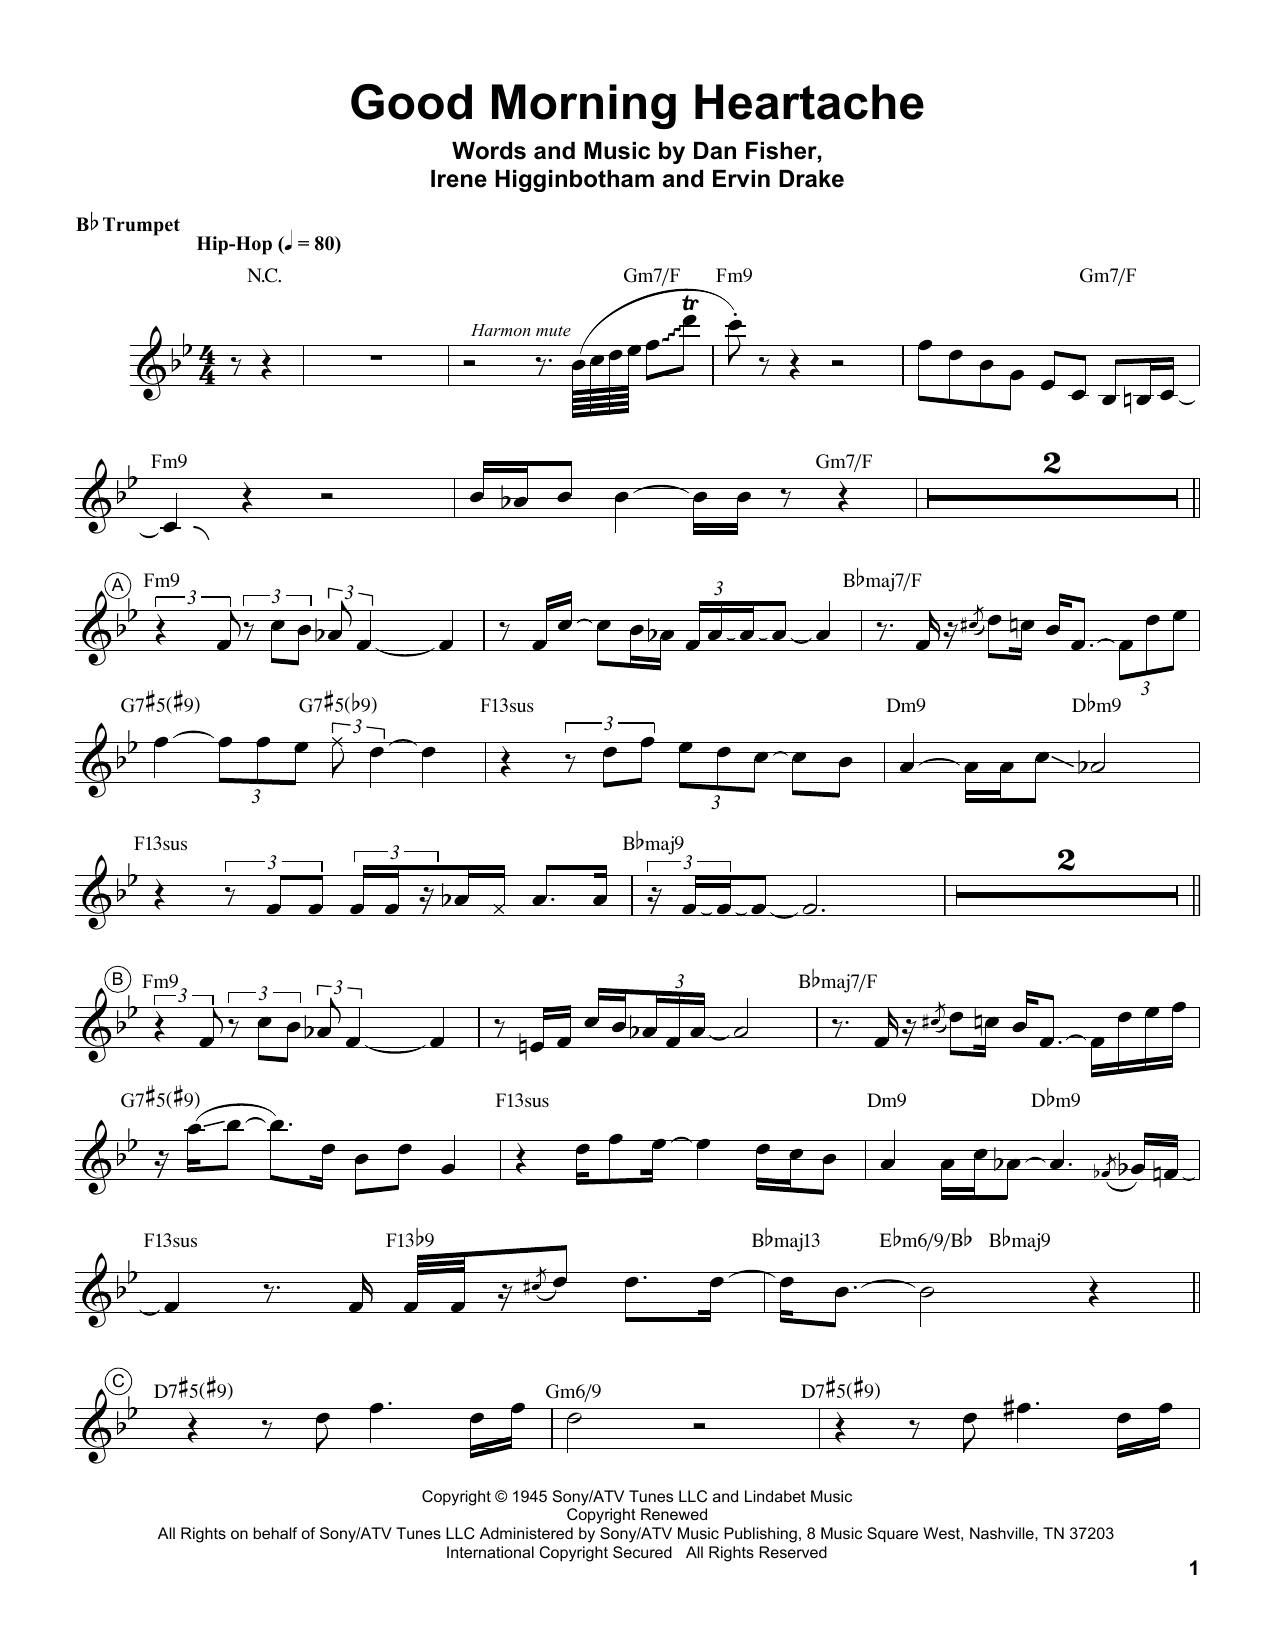 Chris Botti Good Morning Heartache Sheet Music Notes & Chords for Trumpet Transcription - Download or Print PDF